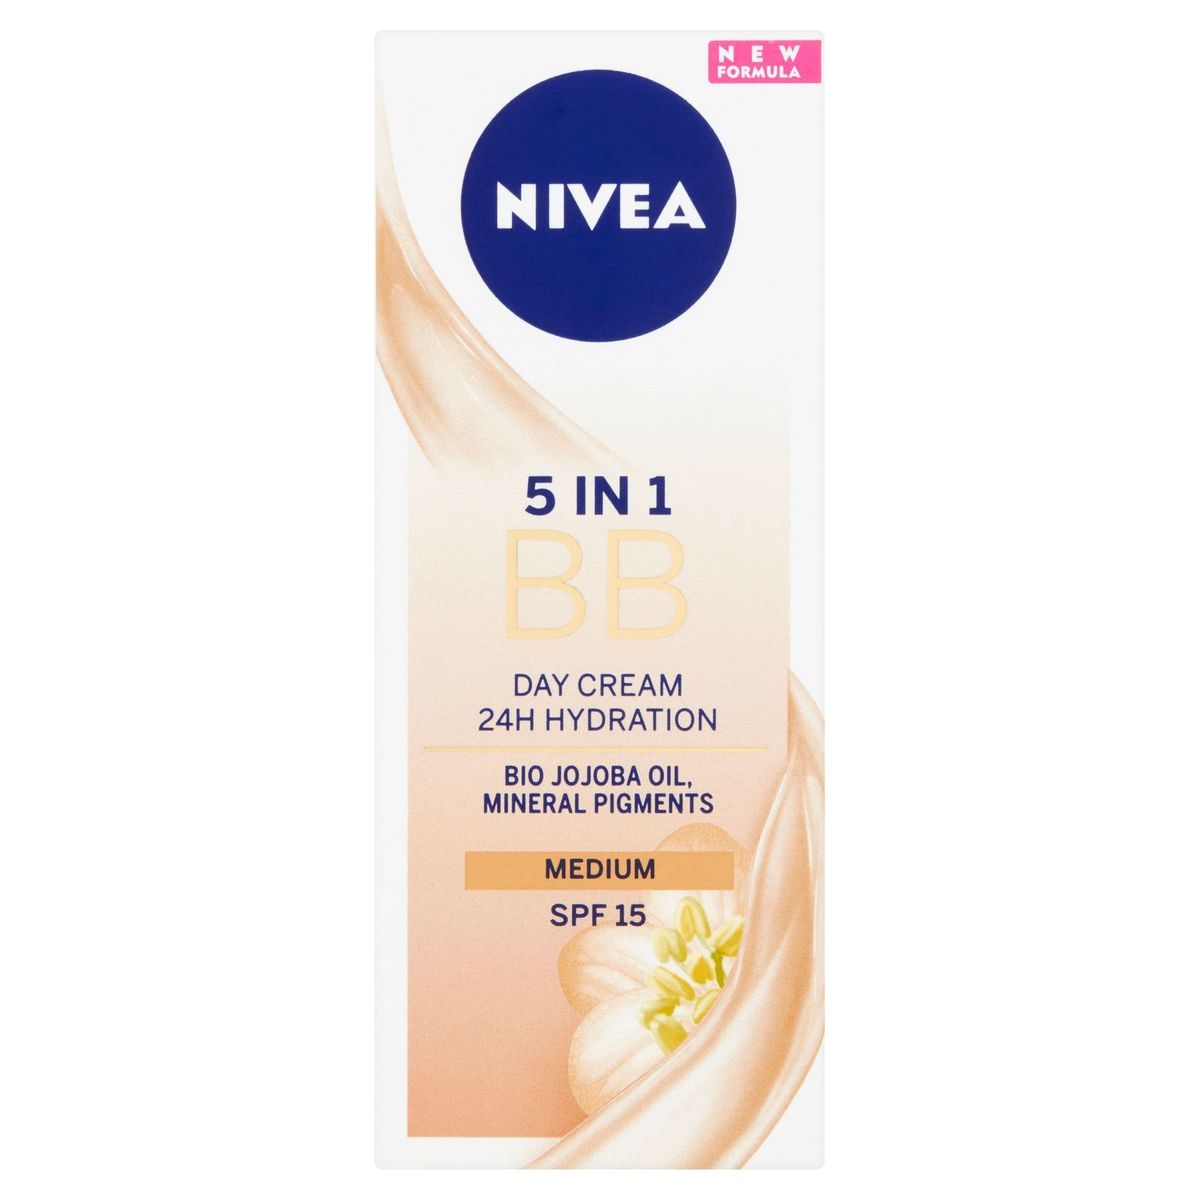 Nivea 5 in 1 BB Day Cream 24h Hydration Medium SPF 15 50 ml